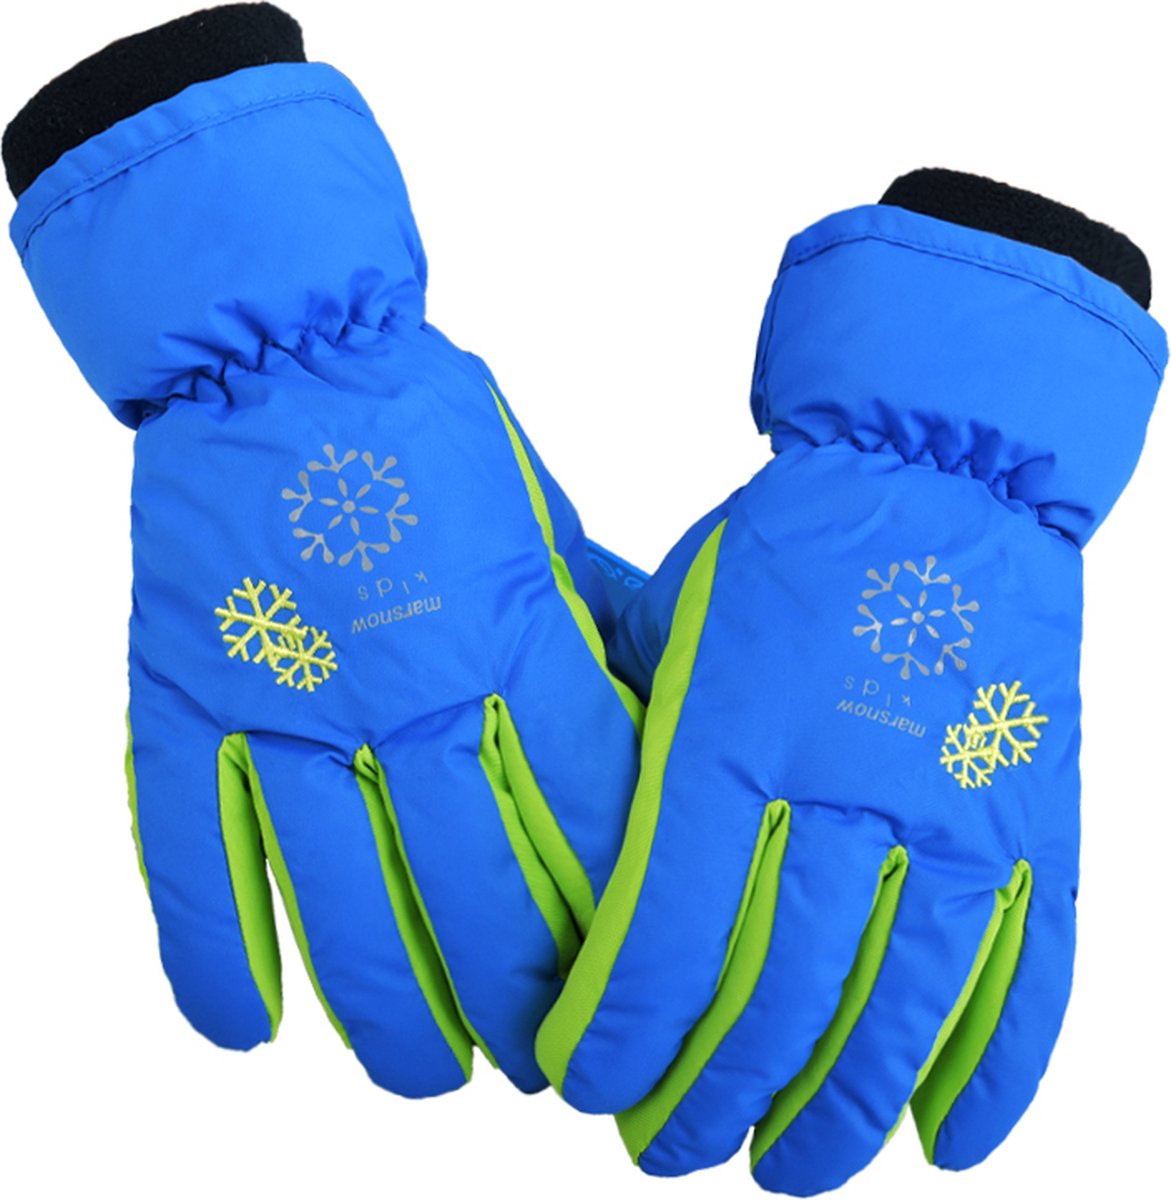 Waterafstotende Kinder Handschoenen - Antislip/Sleeën/Skiën/Snowboarden